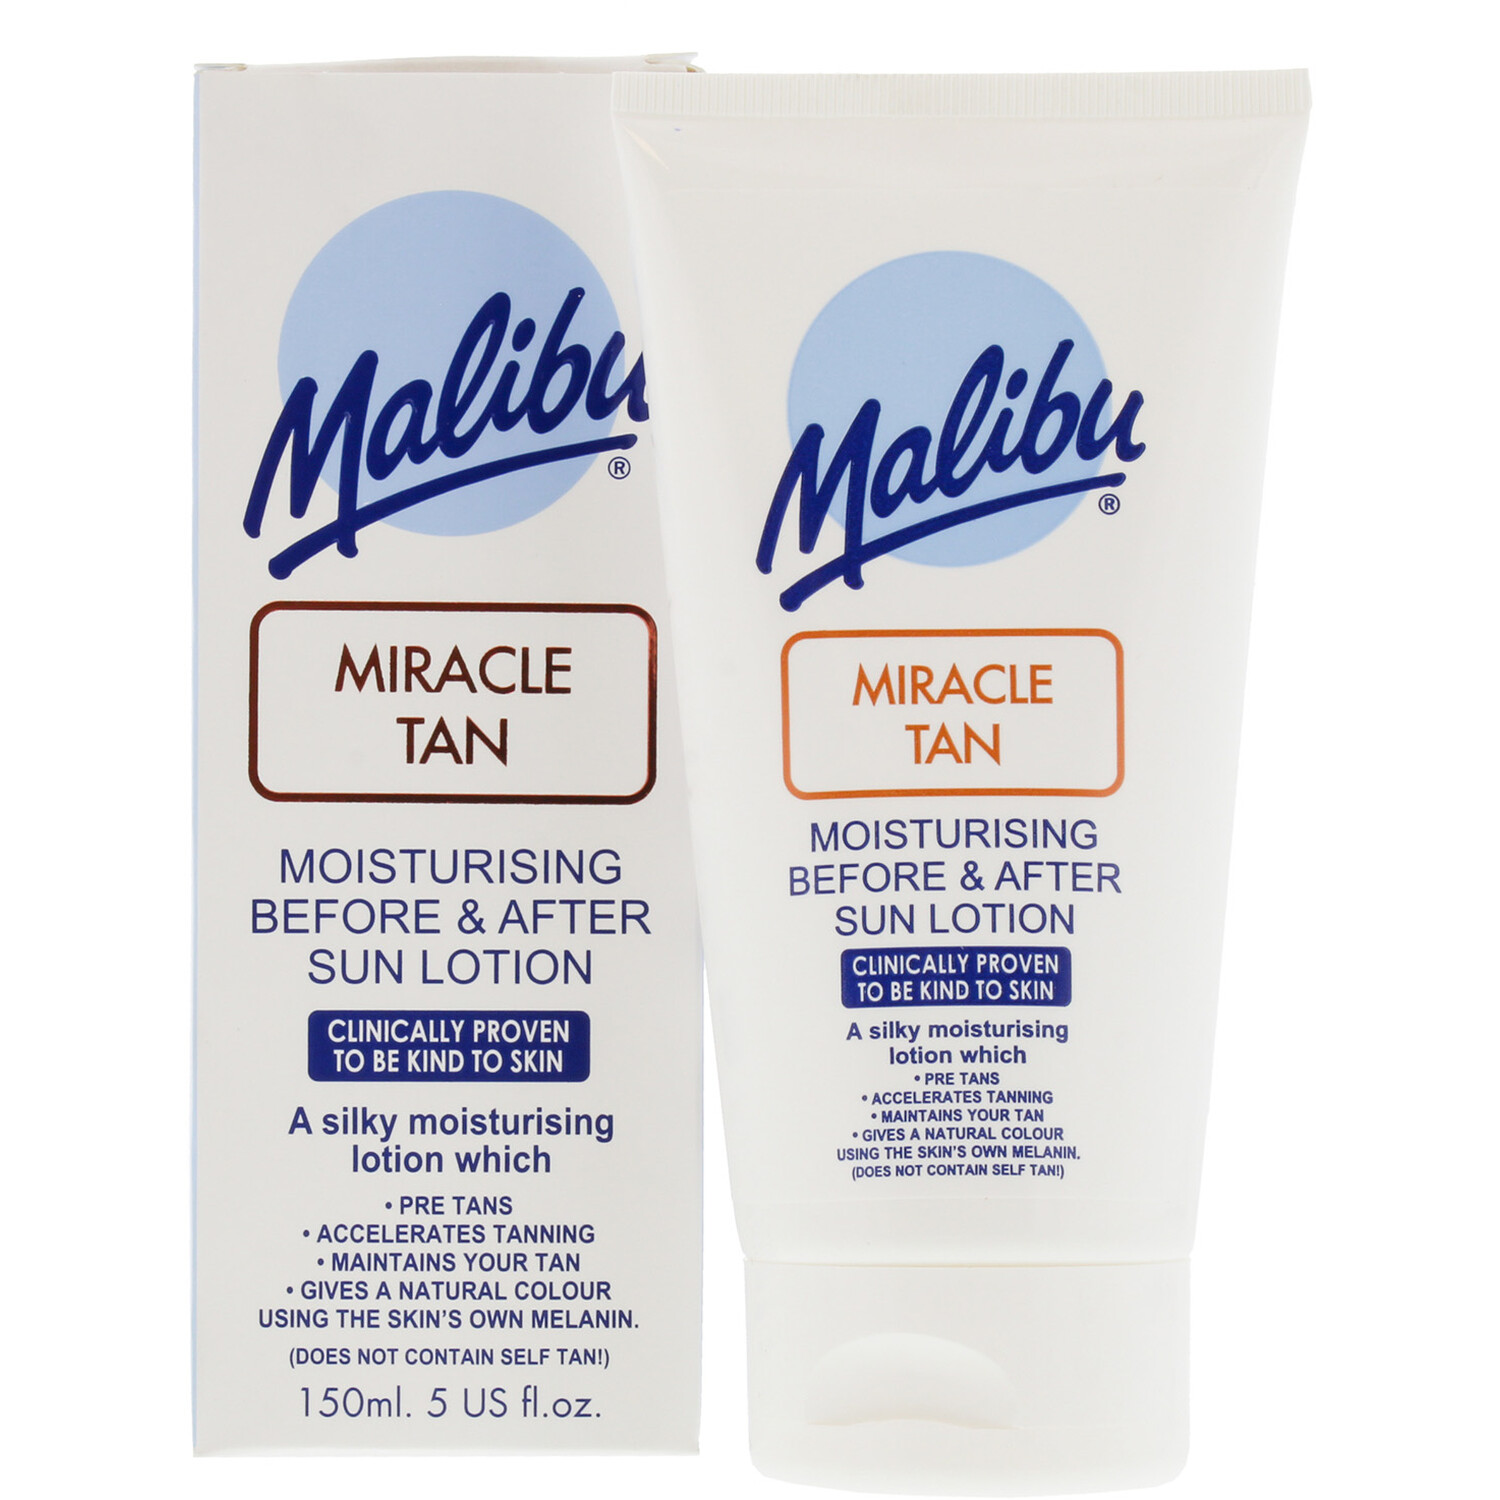 Malibu Miracle Tan Moisturising Before and After Sun Lotion - White Image 1